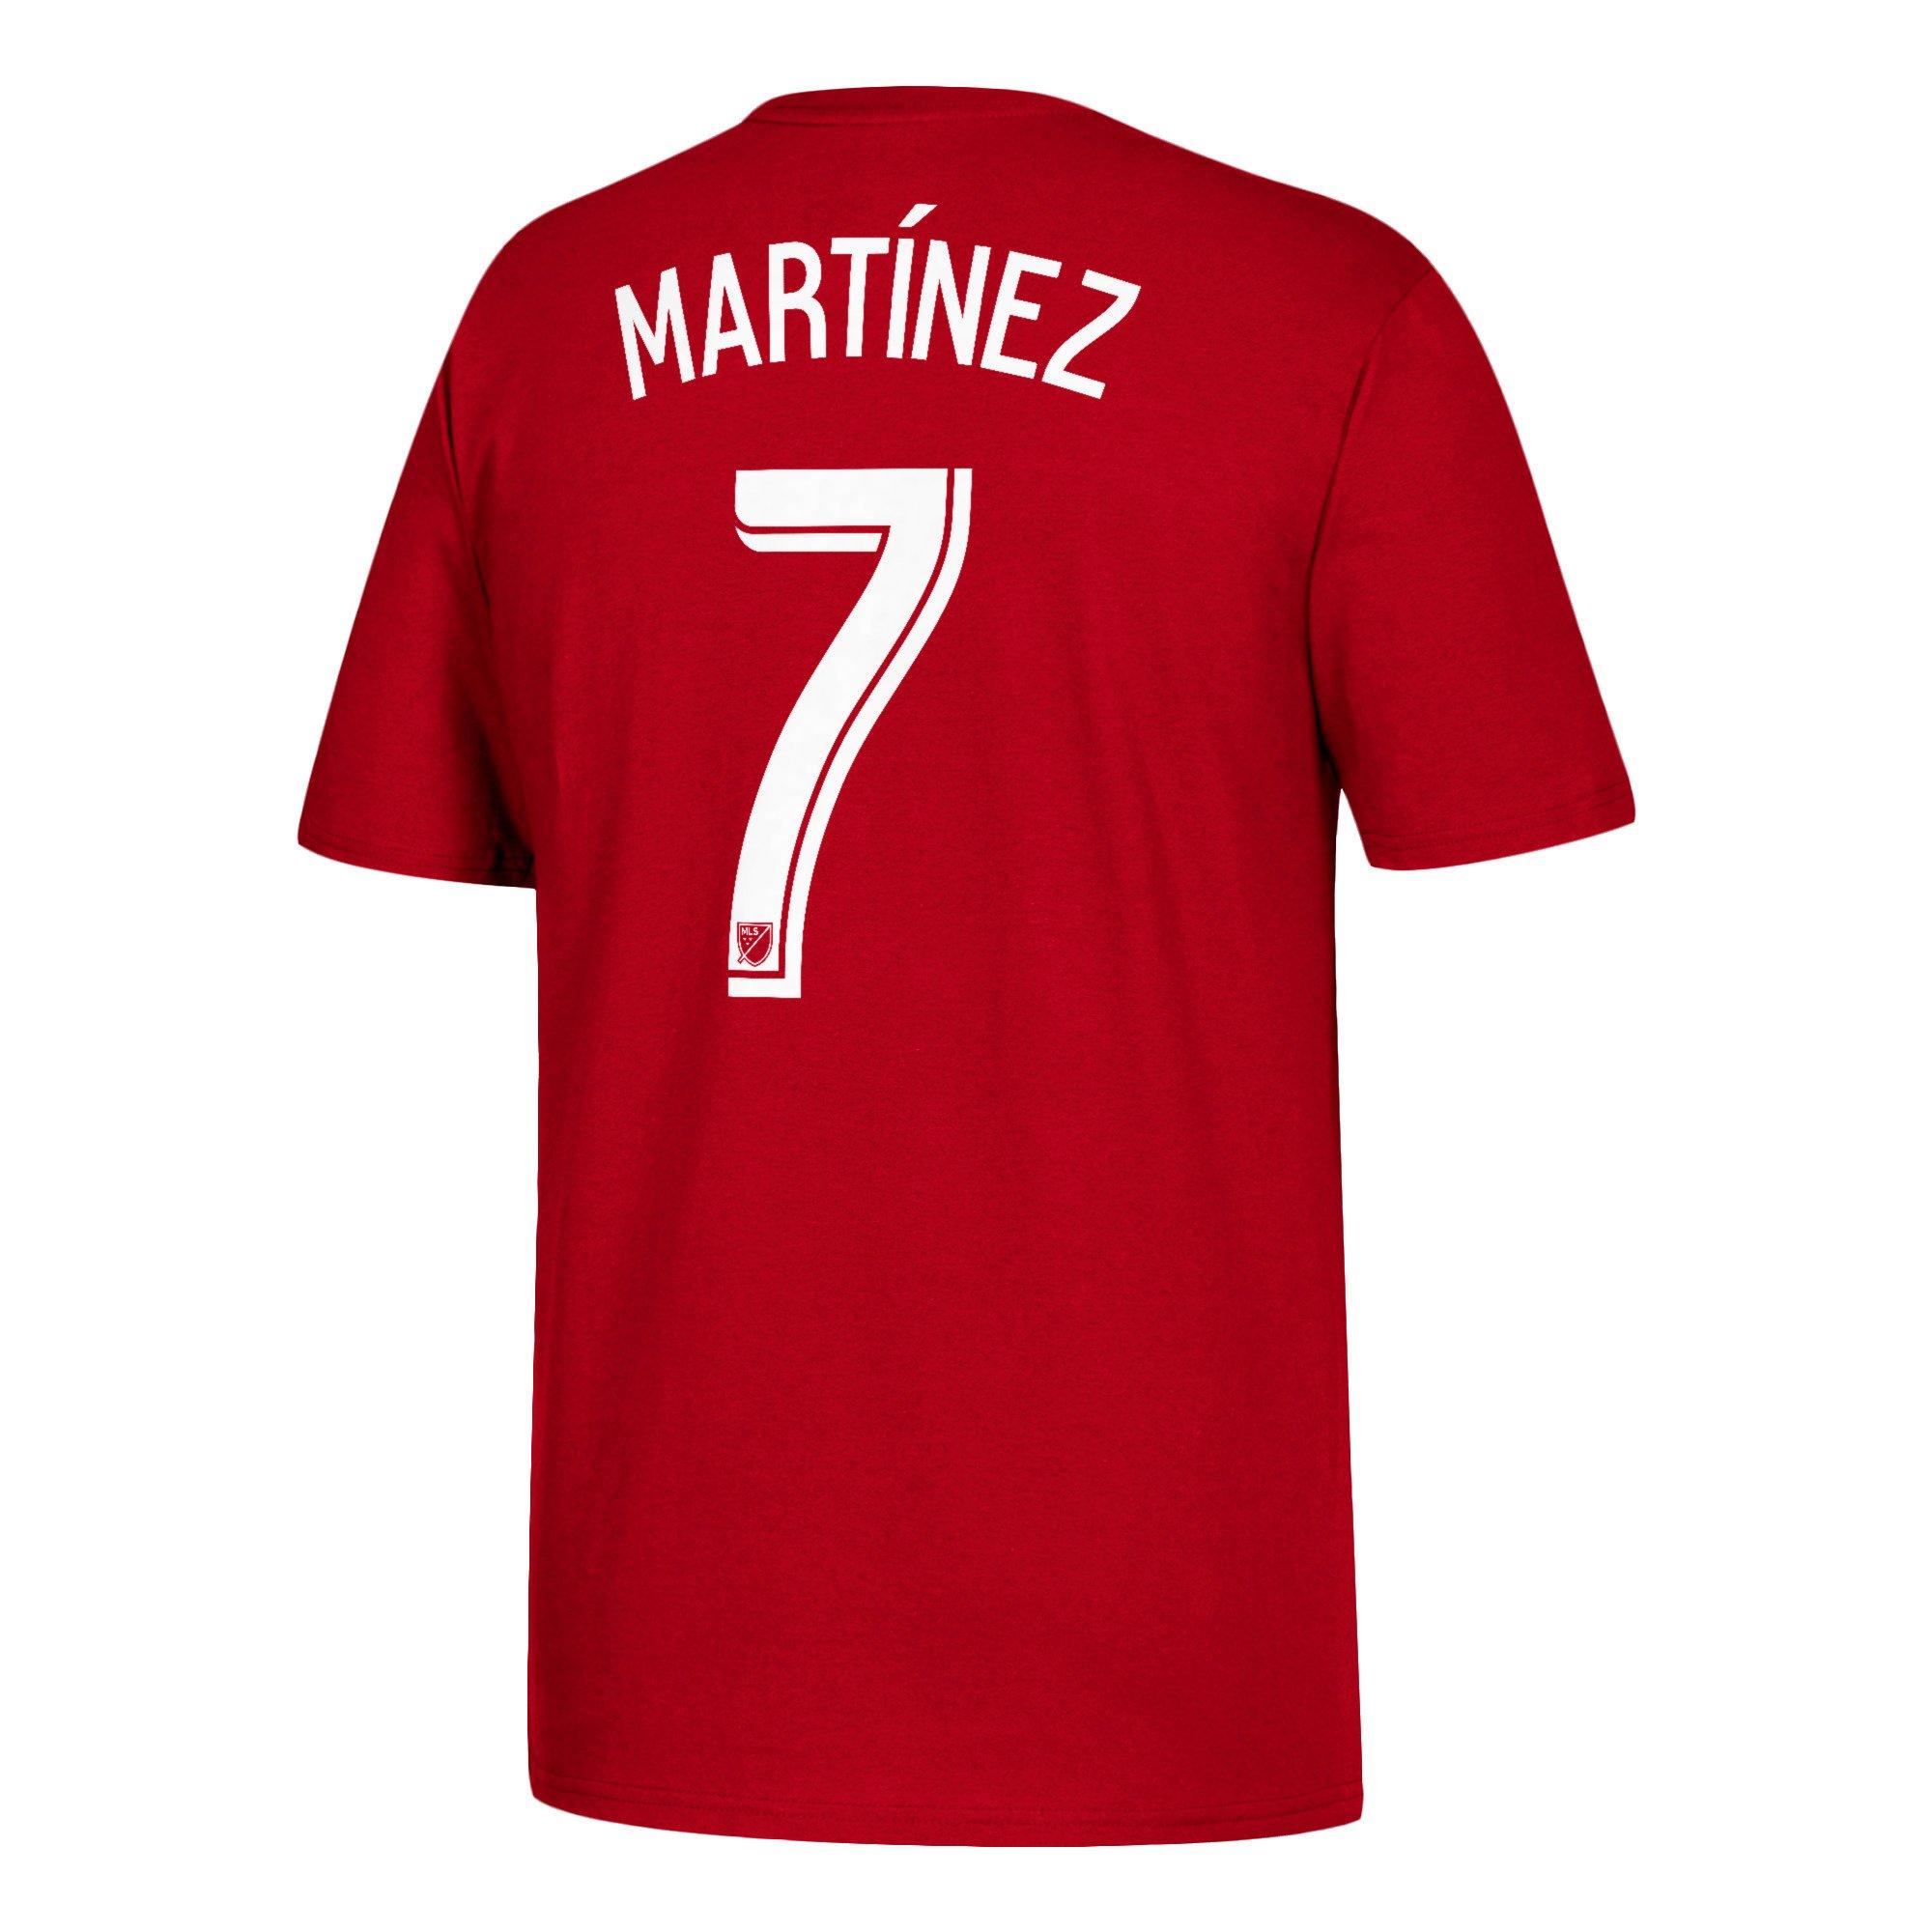 martinez atlanta united jersey